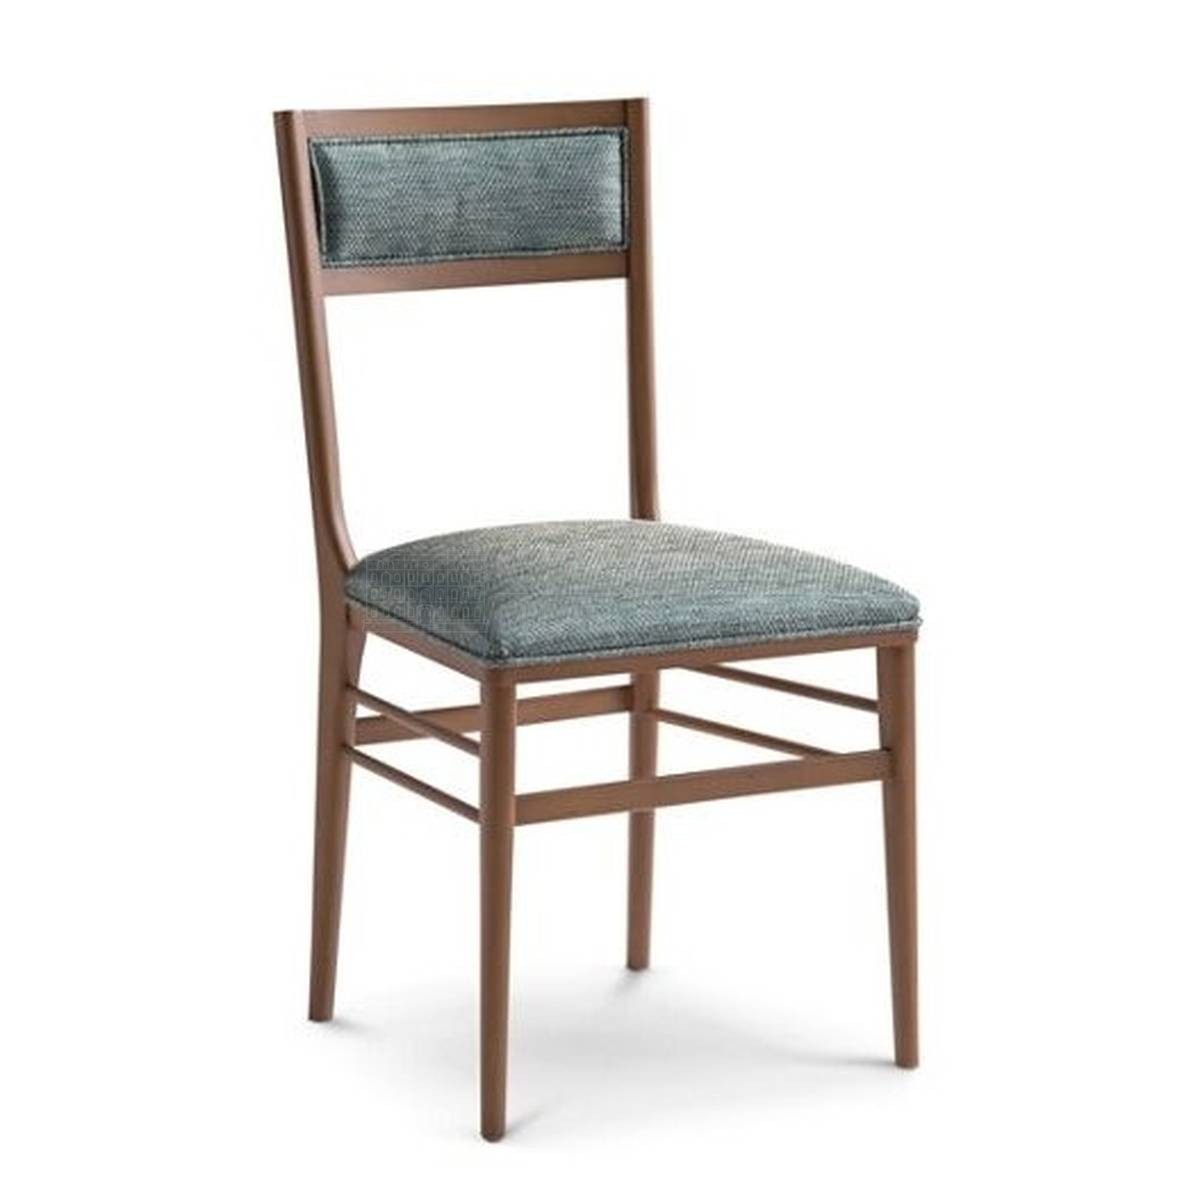 Стул Boppy chair из Франции фабрики ROCHE BOBOIS